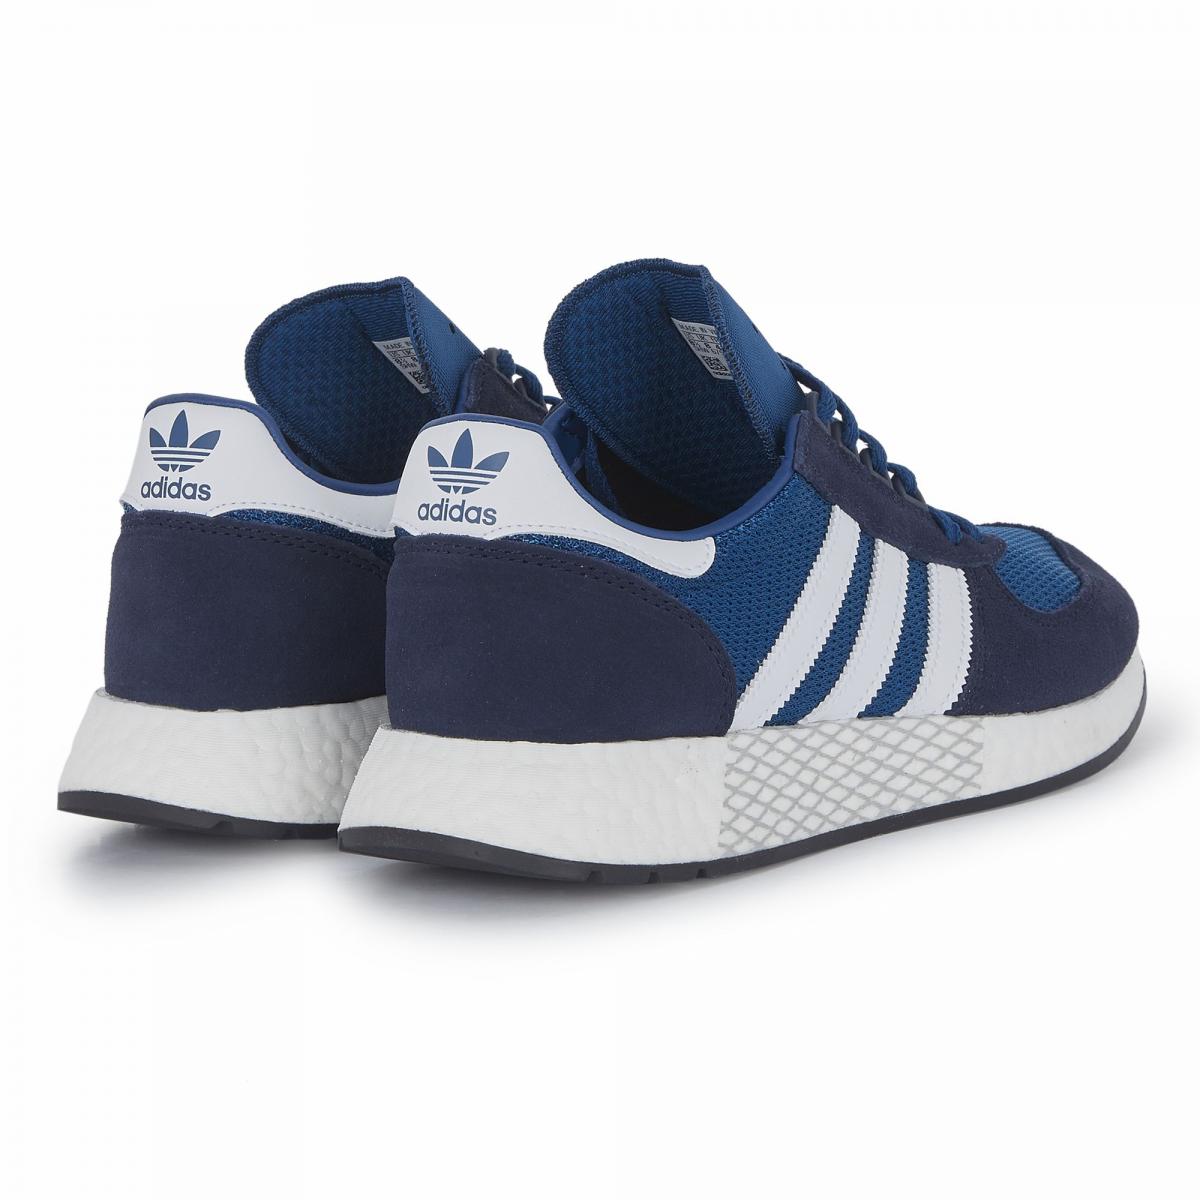 adidas sneakers homme bleu